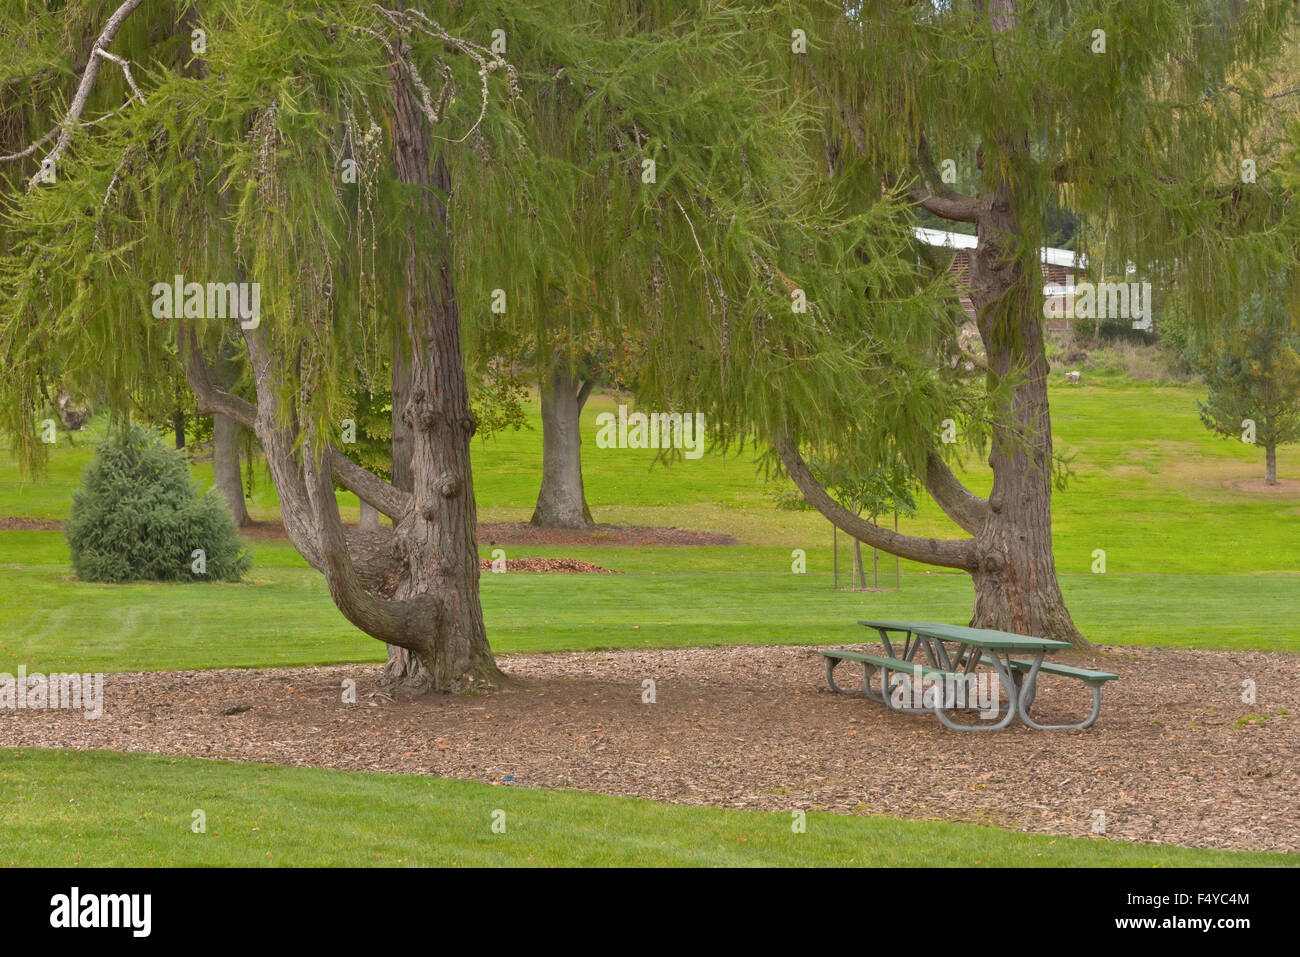 Evergreen trees and foliage in a public park Tacoma Washington state. Stock Photo